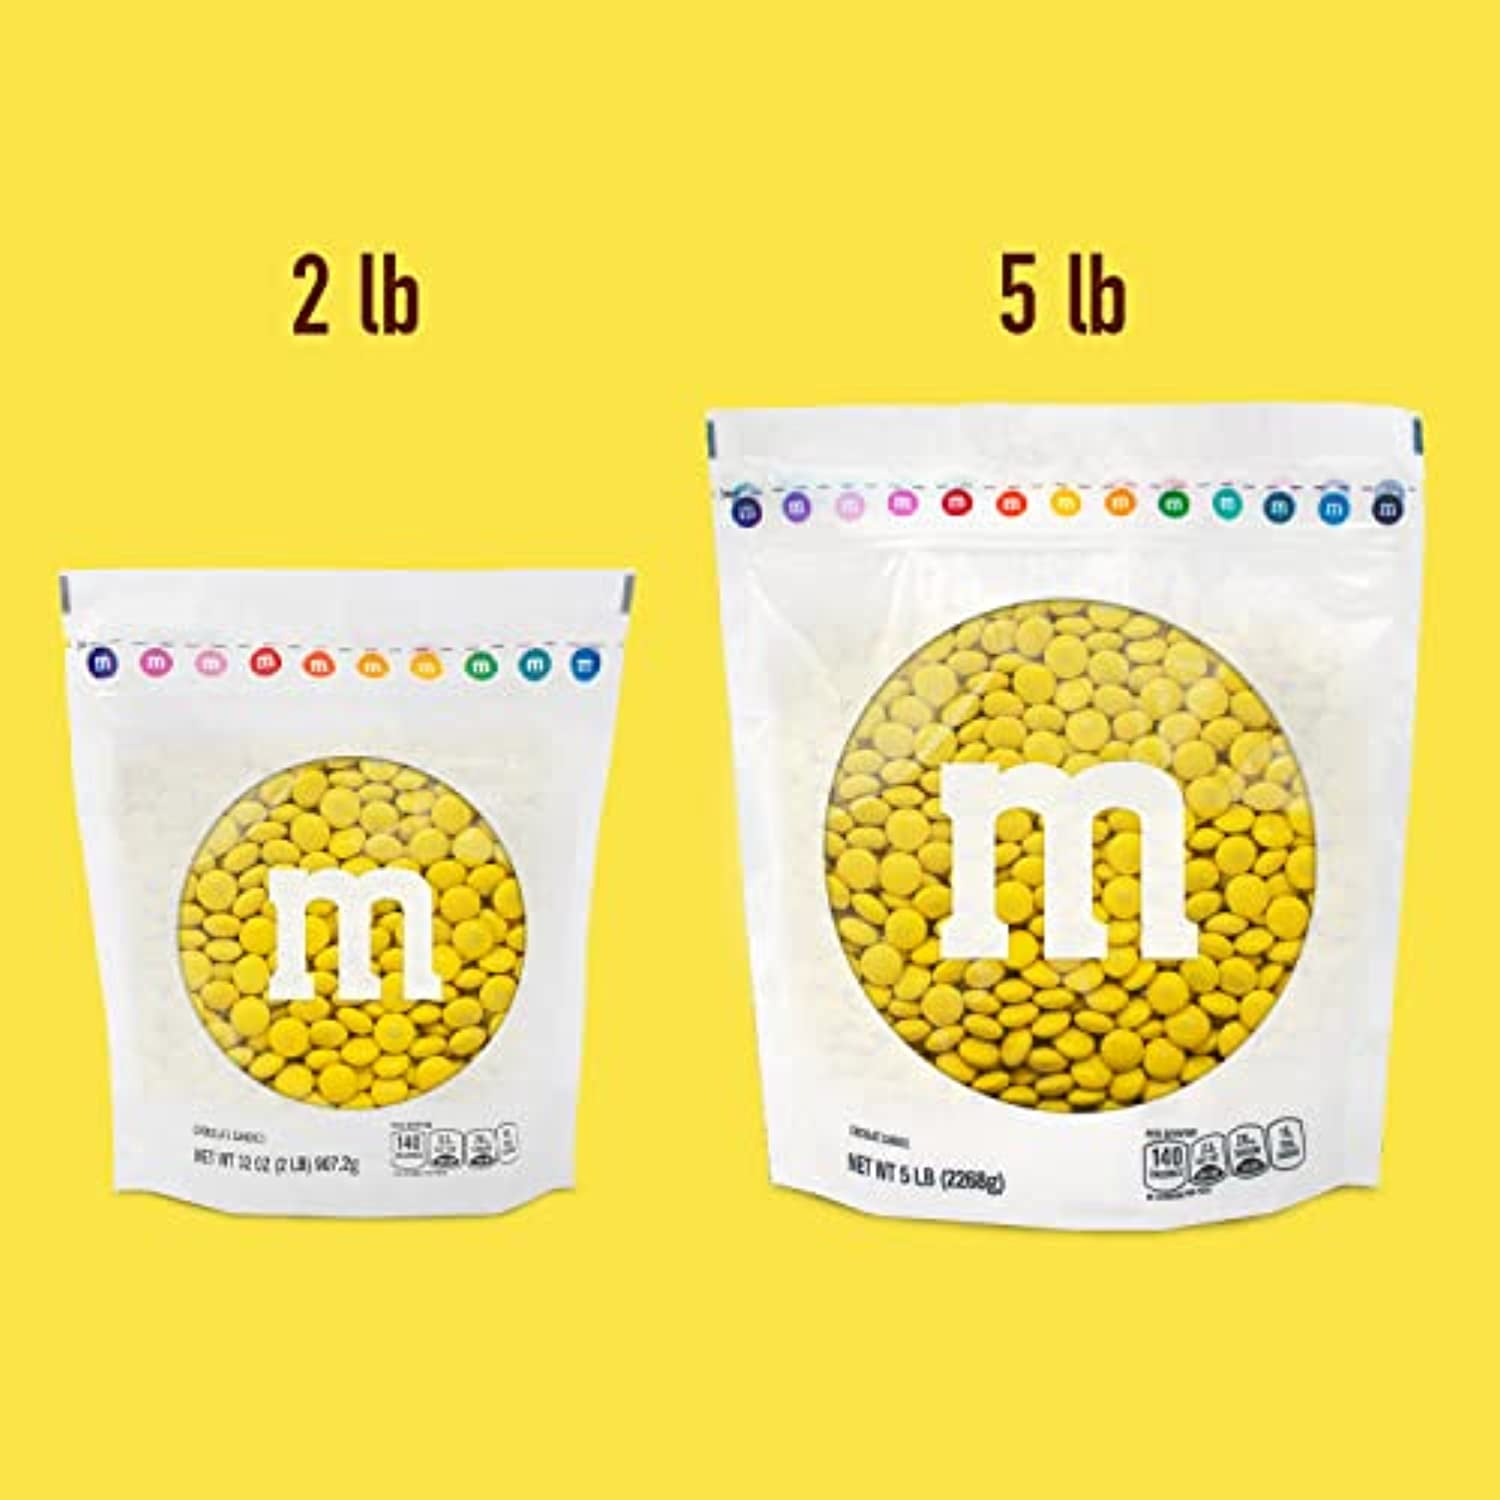 1,000 Pcs Yellow M&M's Candy Milk Chocolate (2lb, Approx. 1,000 Pcs)